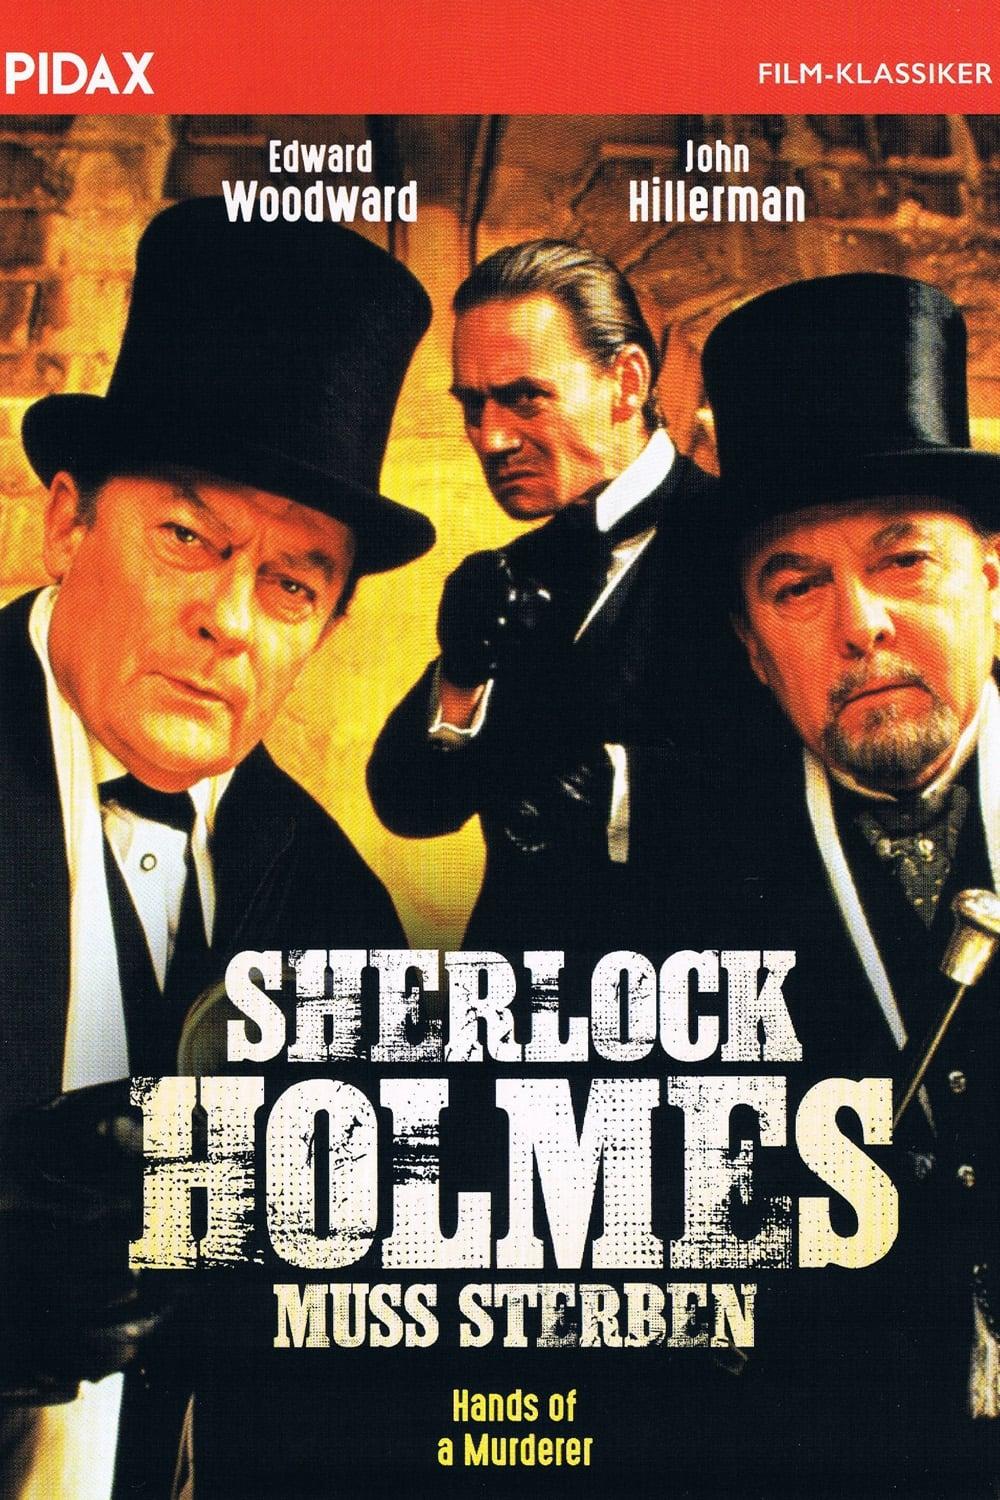 Sherlock Holmes muß sterben poster